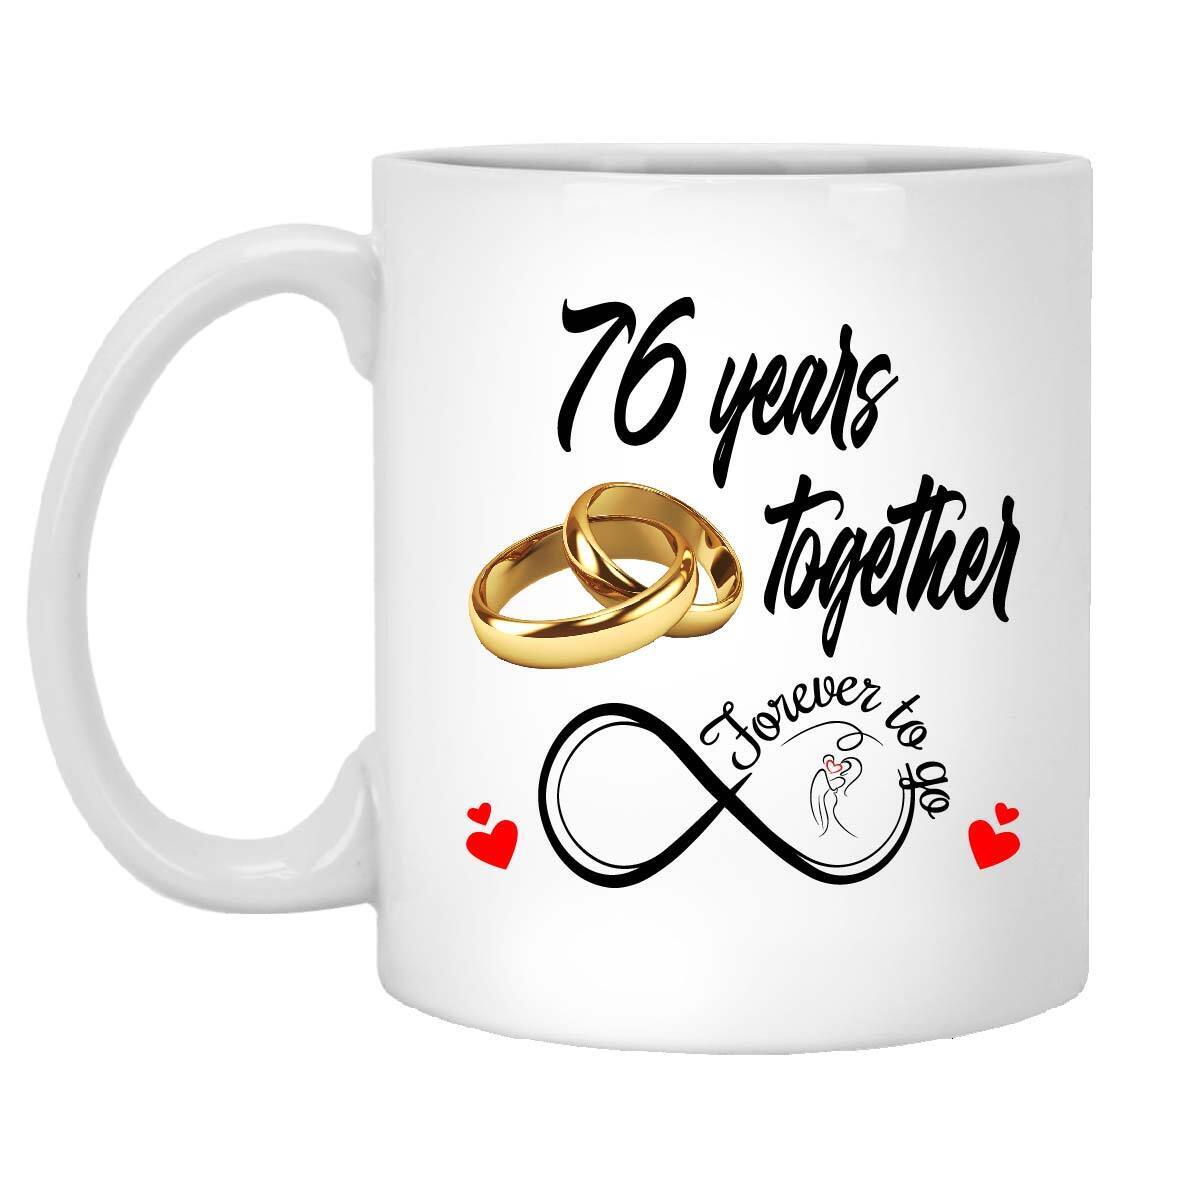 76st wedding anniversary gift for wife Coffee MUG th 76 Years together Husband